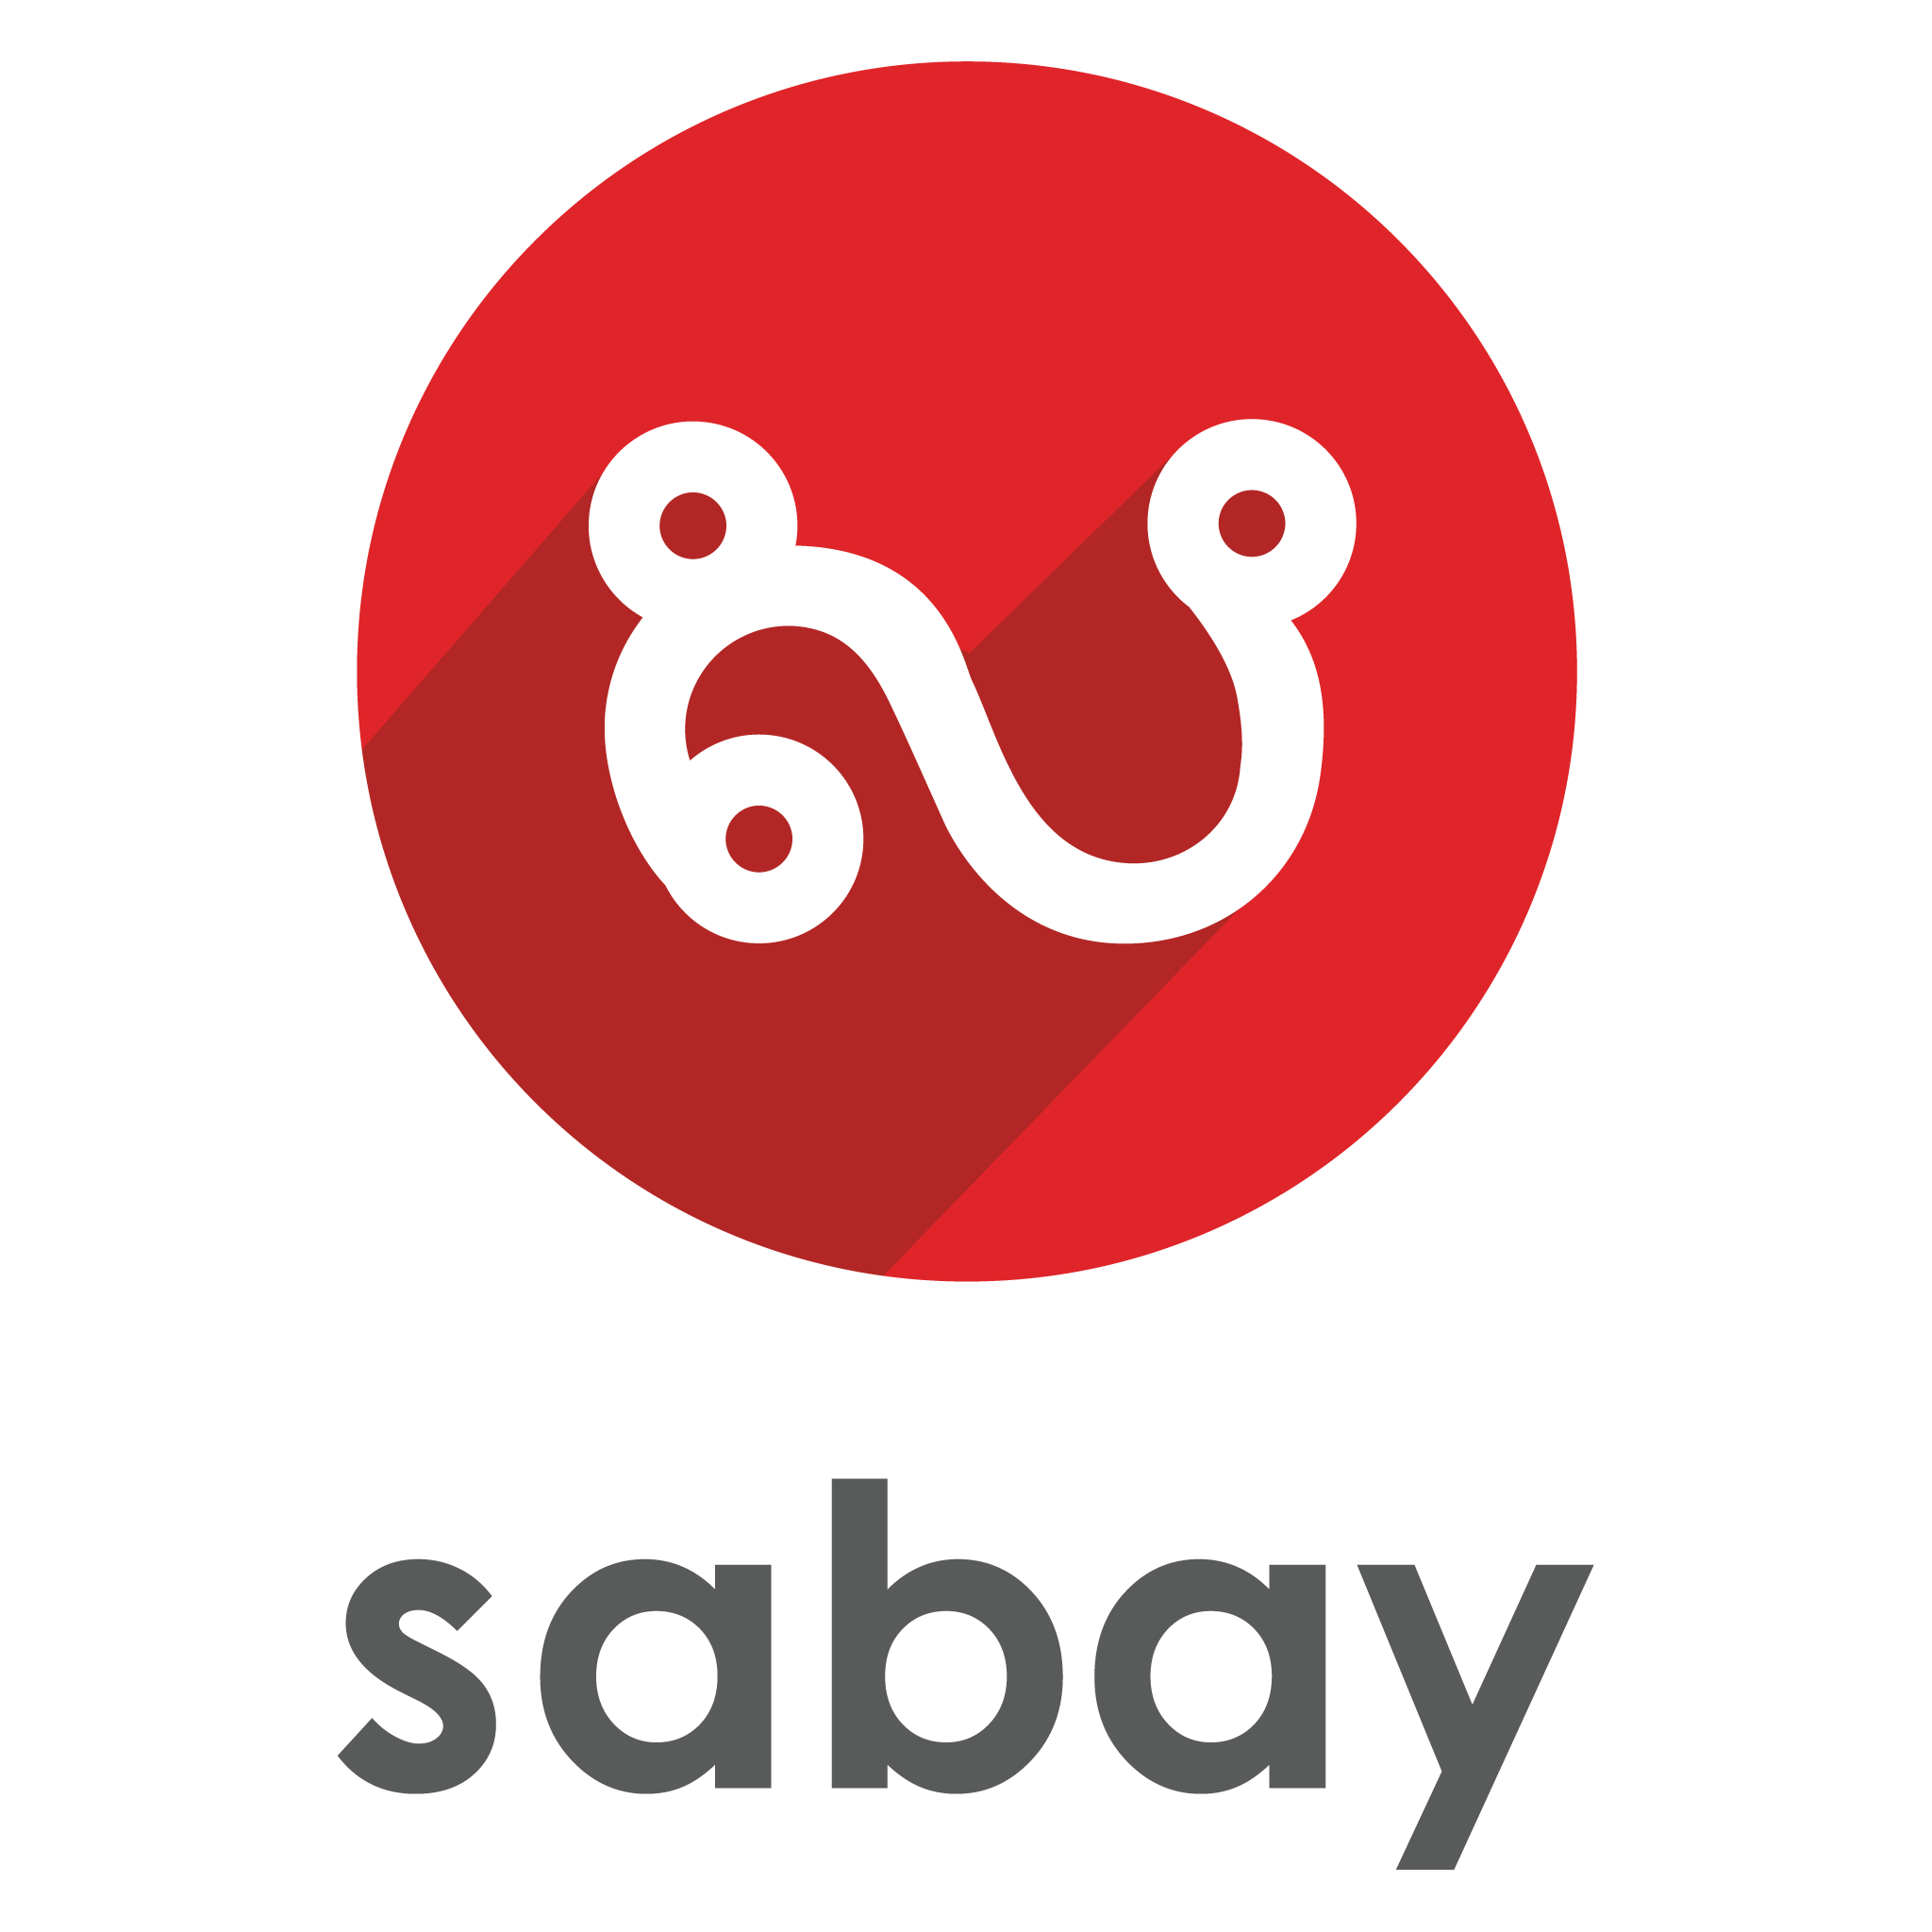 Sabay-logo.png